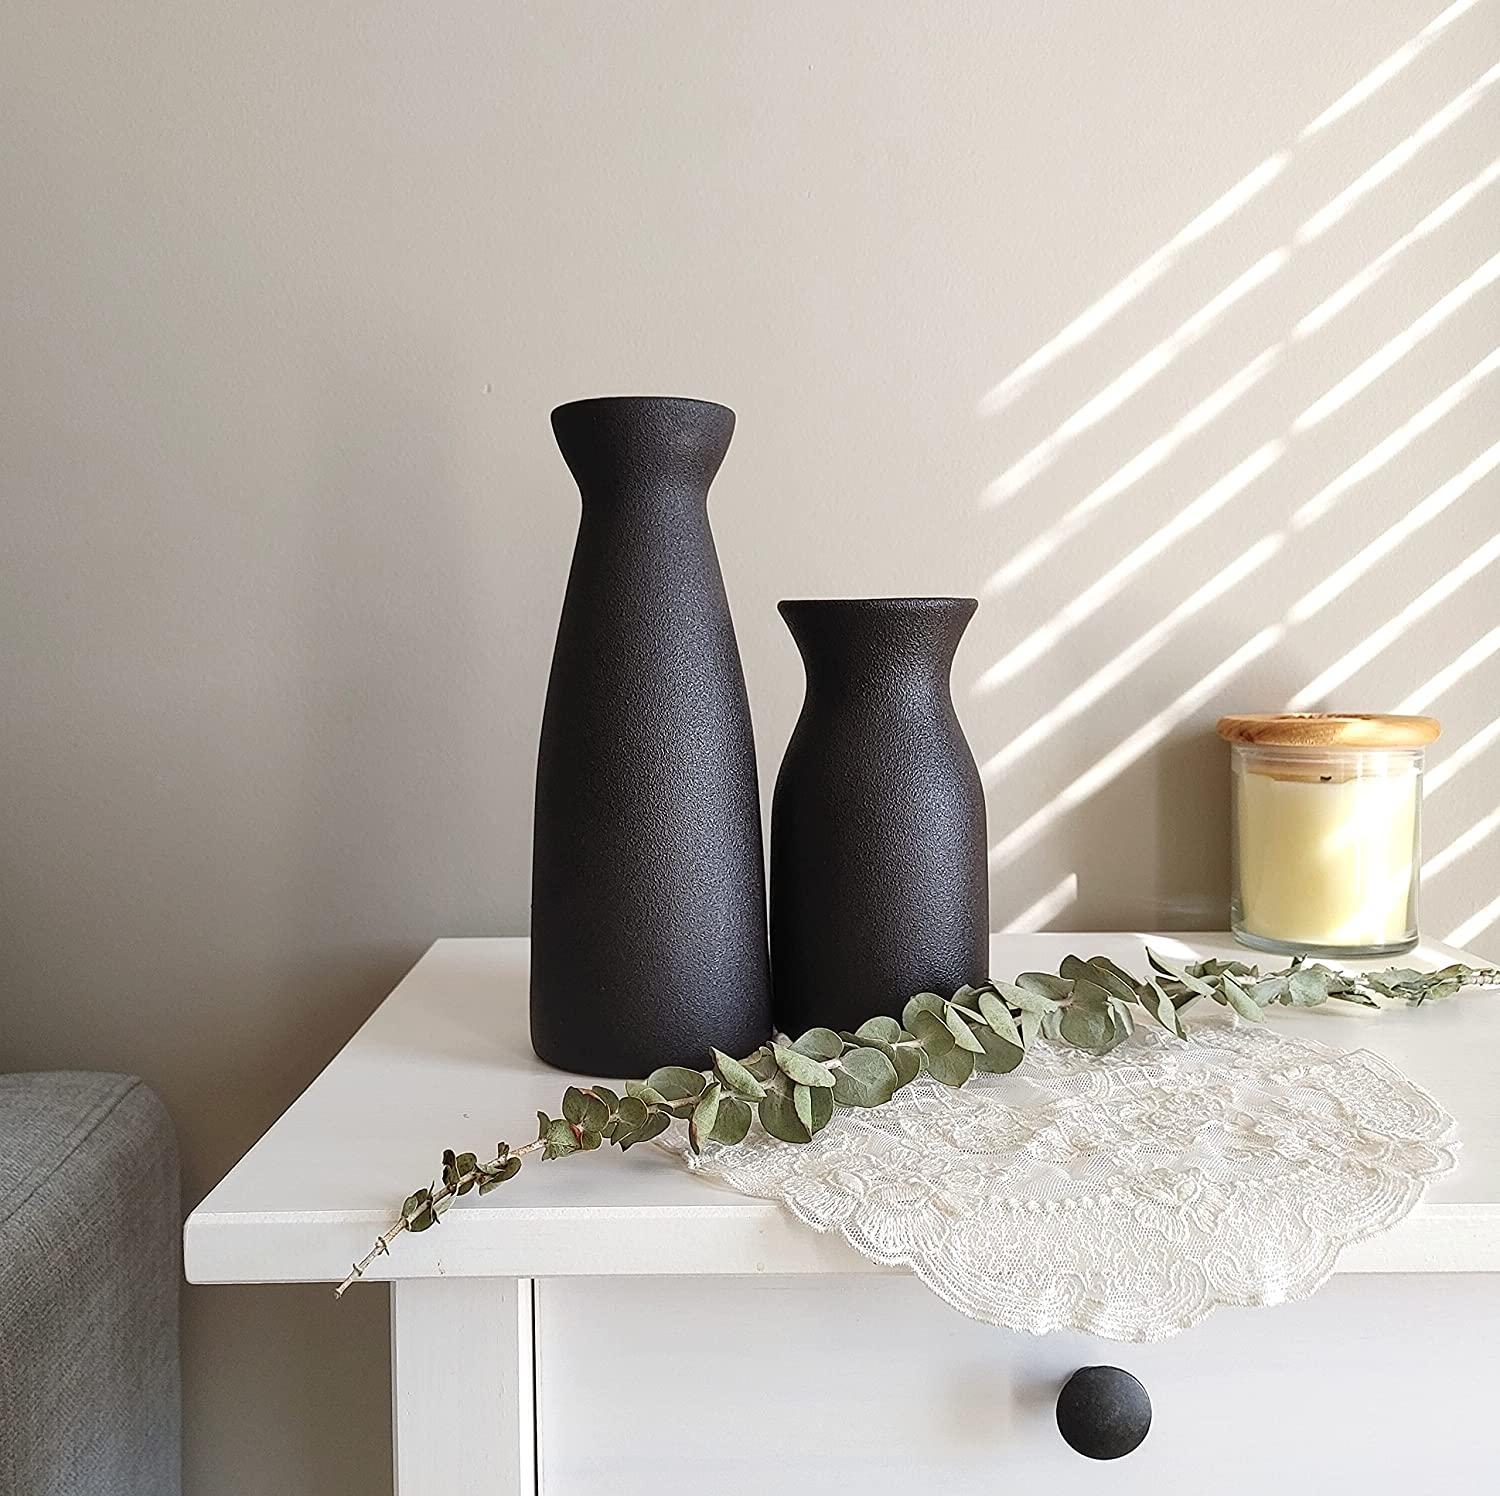 Minikle black ceramic vase set: $30 